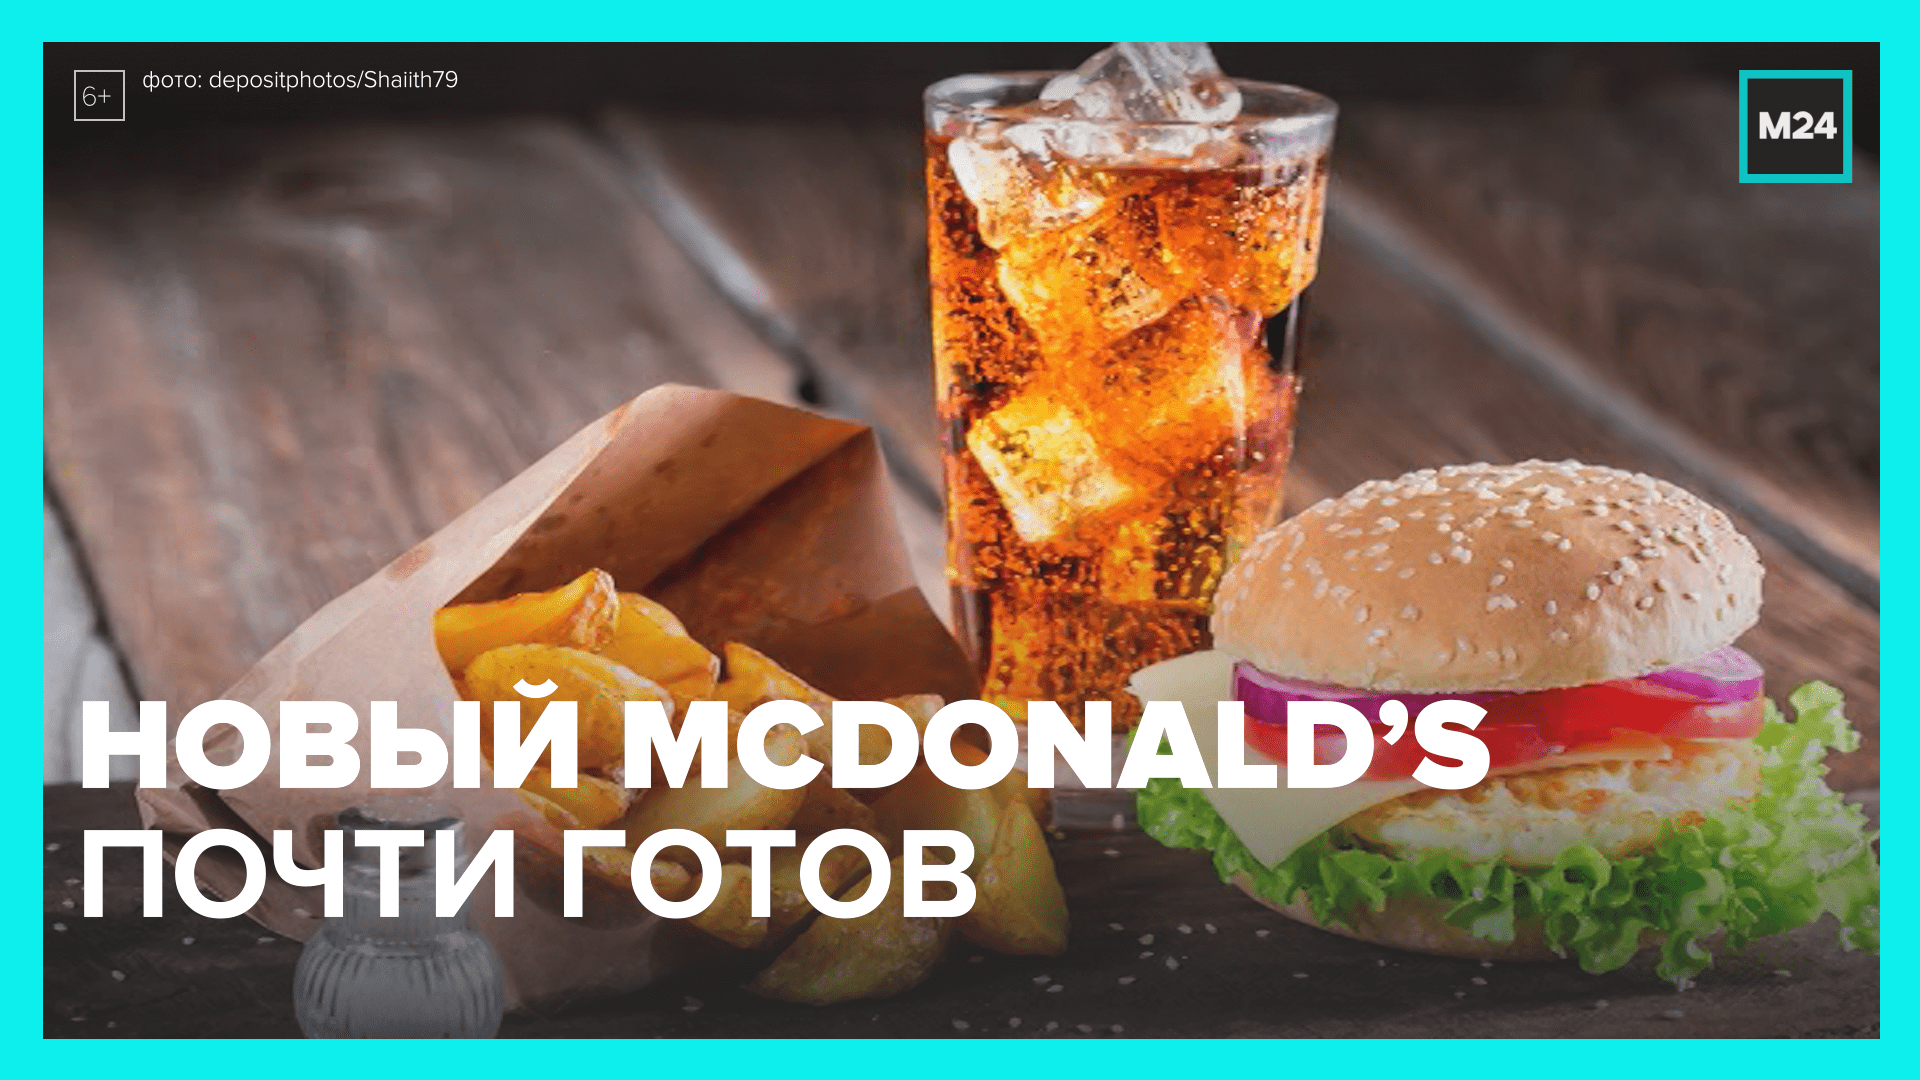 McDonald’s не показал лого, но набирает сотрудников – Москва 24